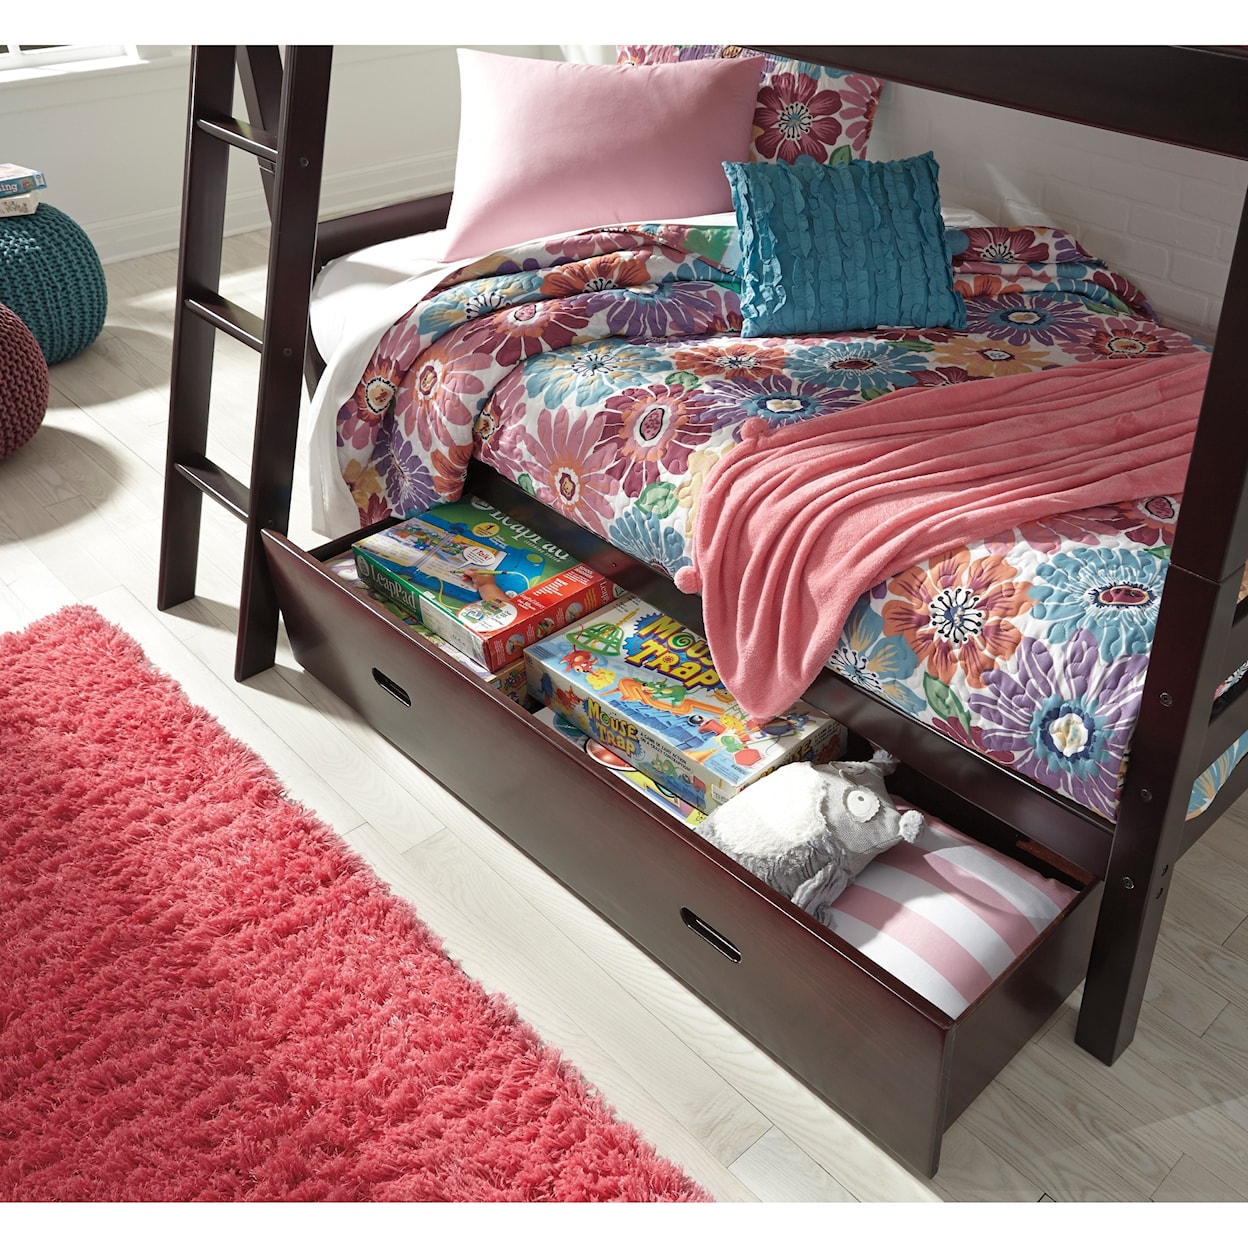 Signature Design by Ashley Furniture Halanton Twin/Full Bunk Bed w/ Under Bed Storage